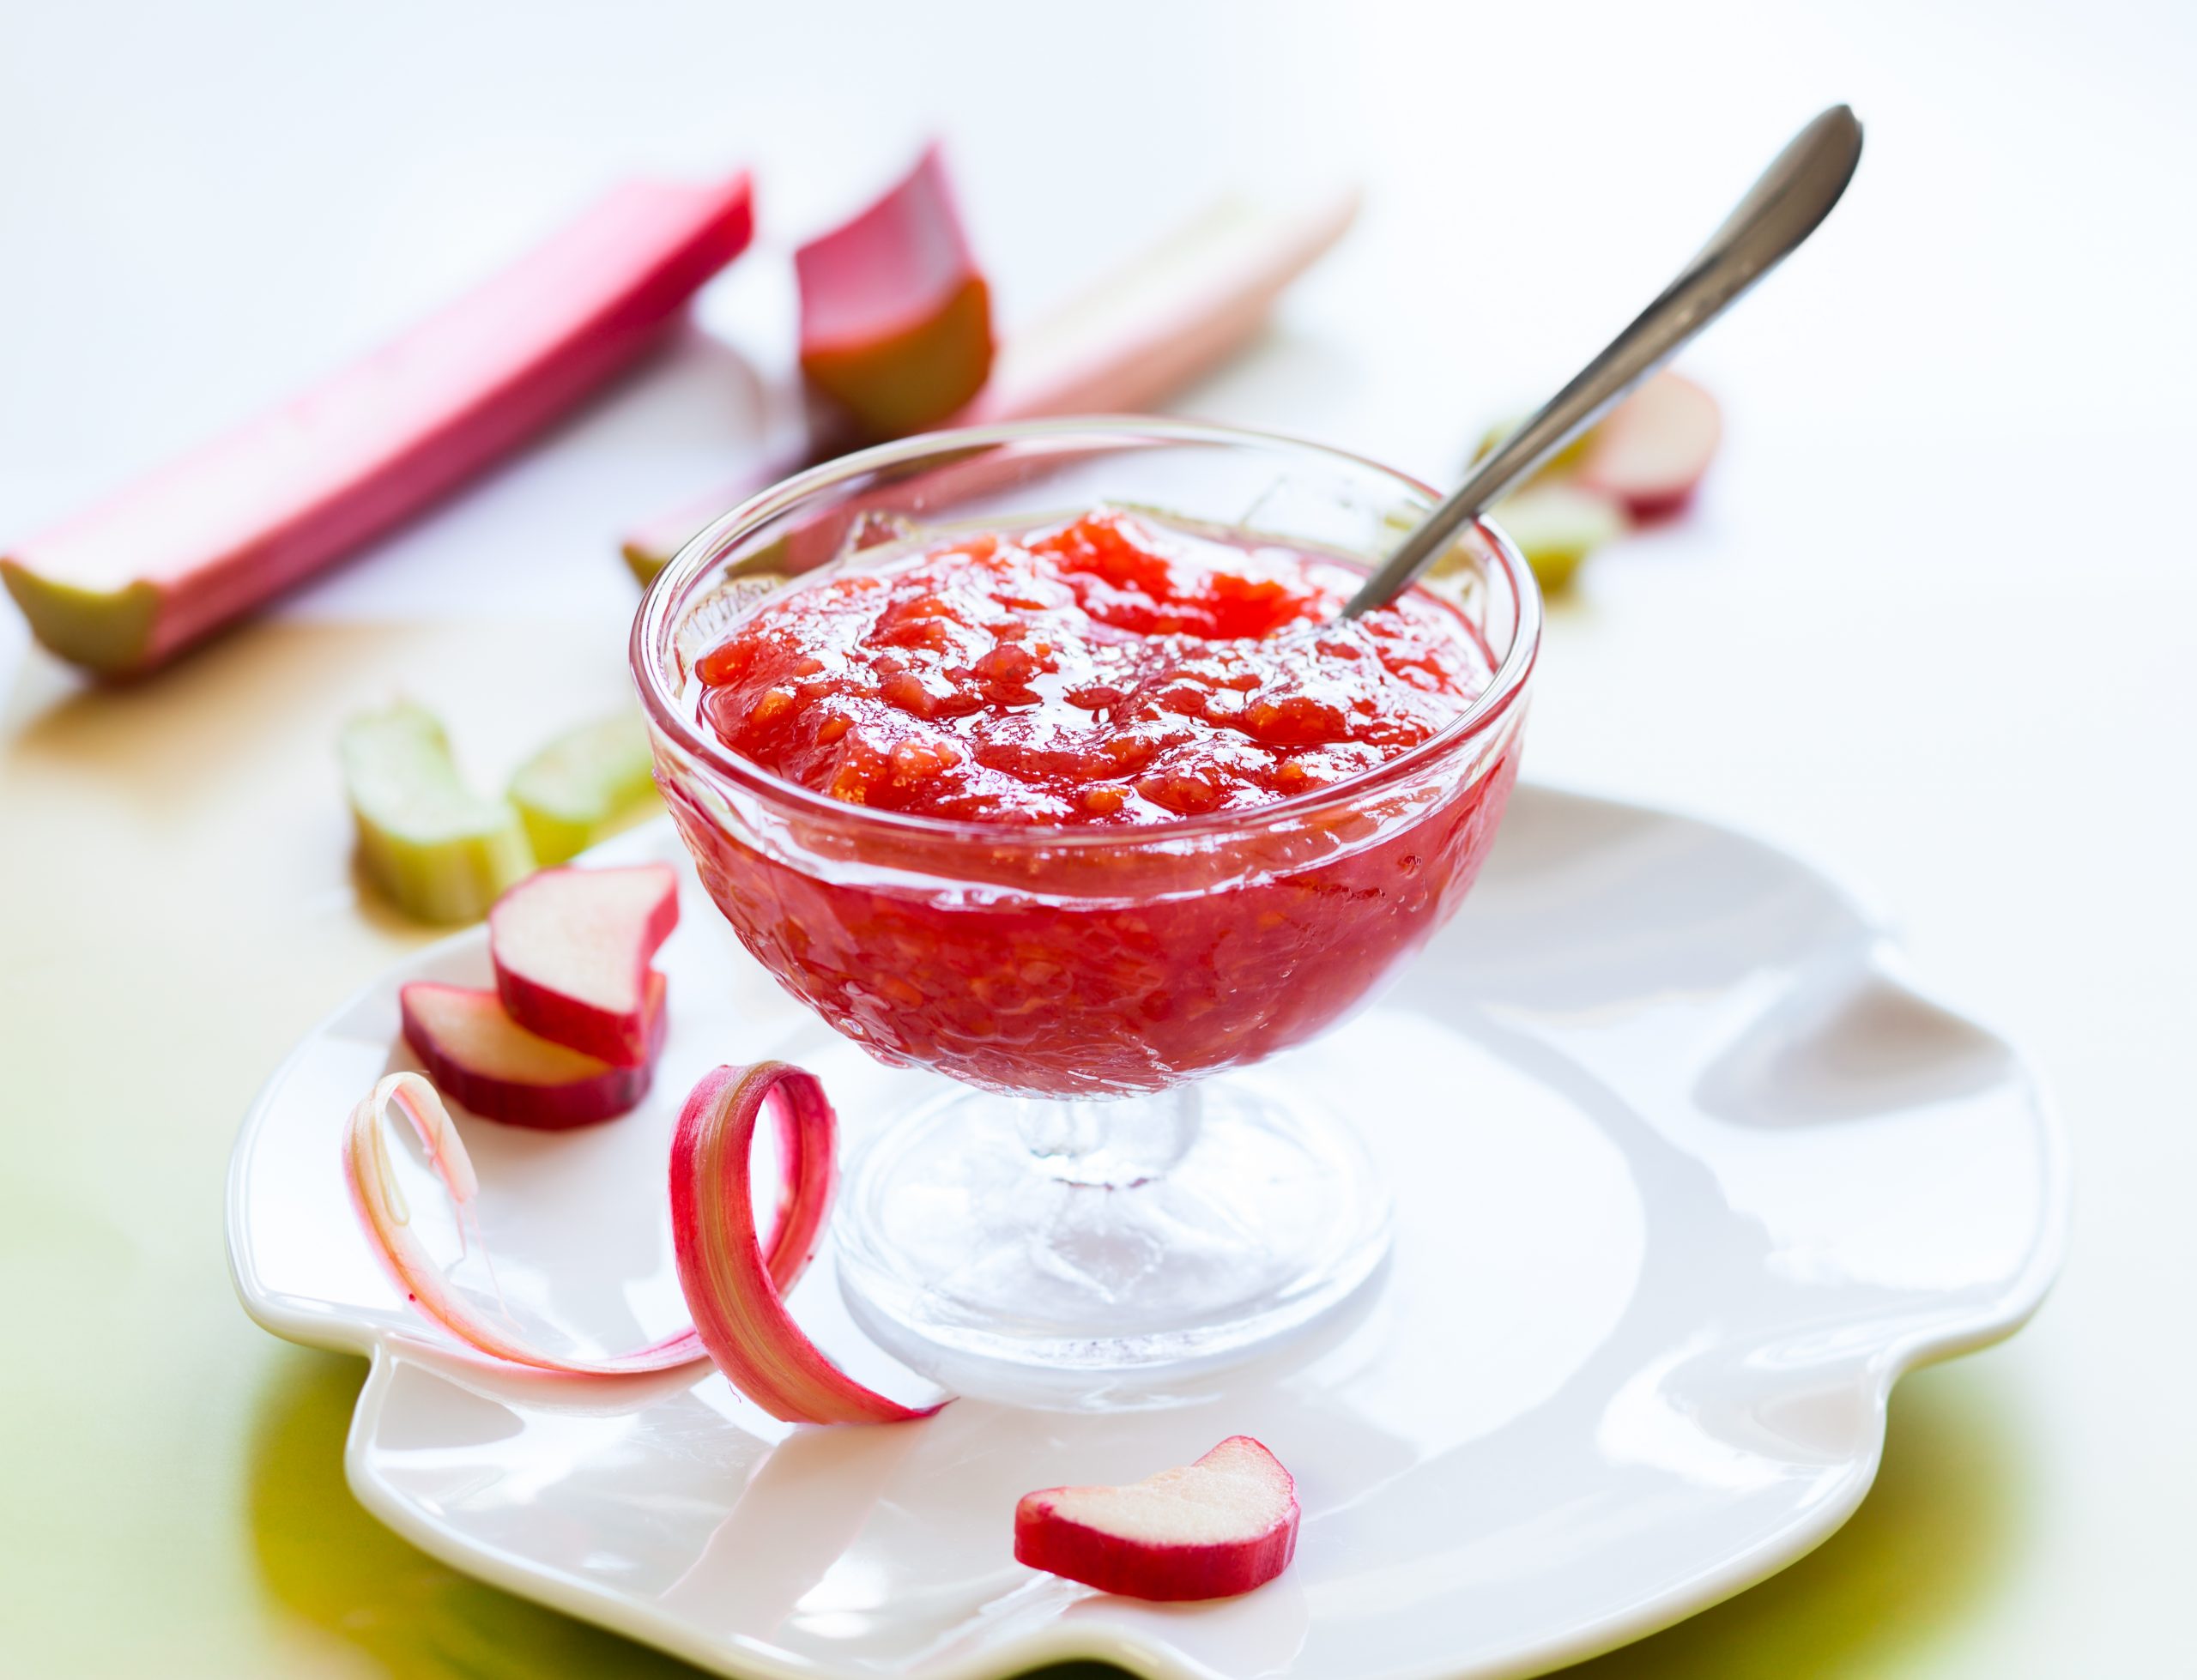 Food in Jars’ Rhubarb Jam with Vanilla photo